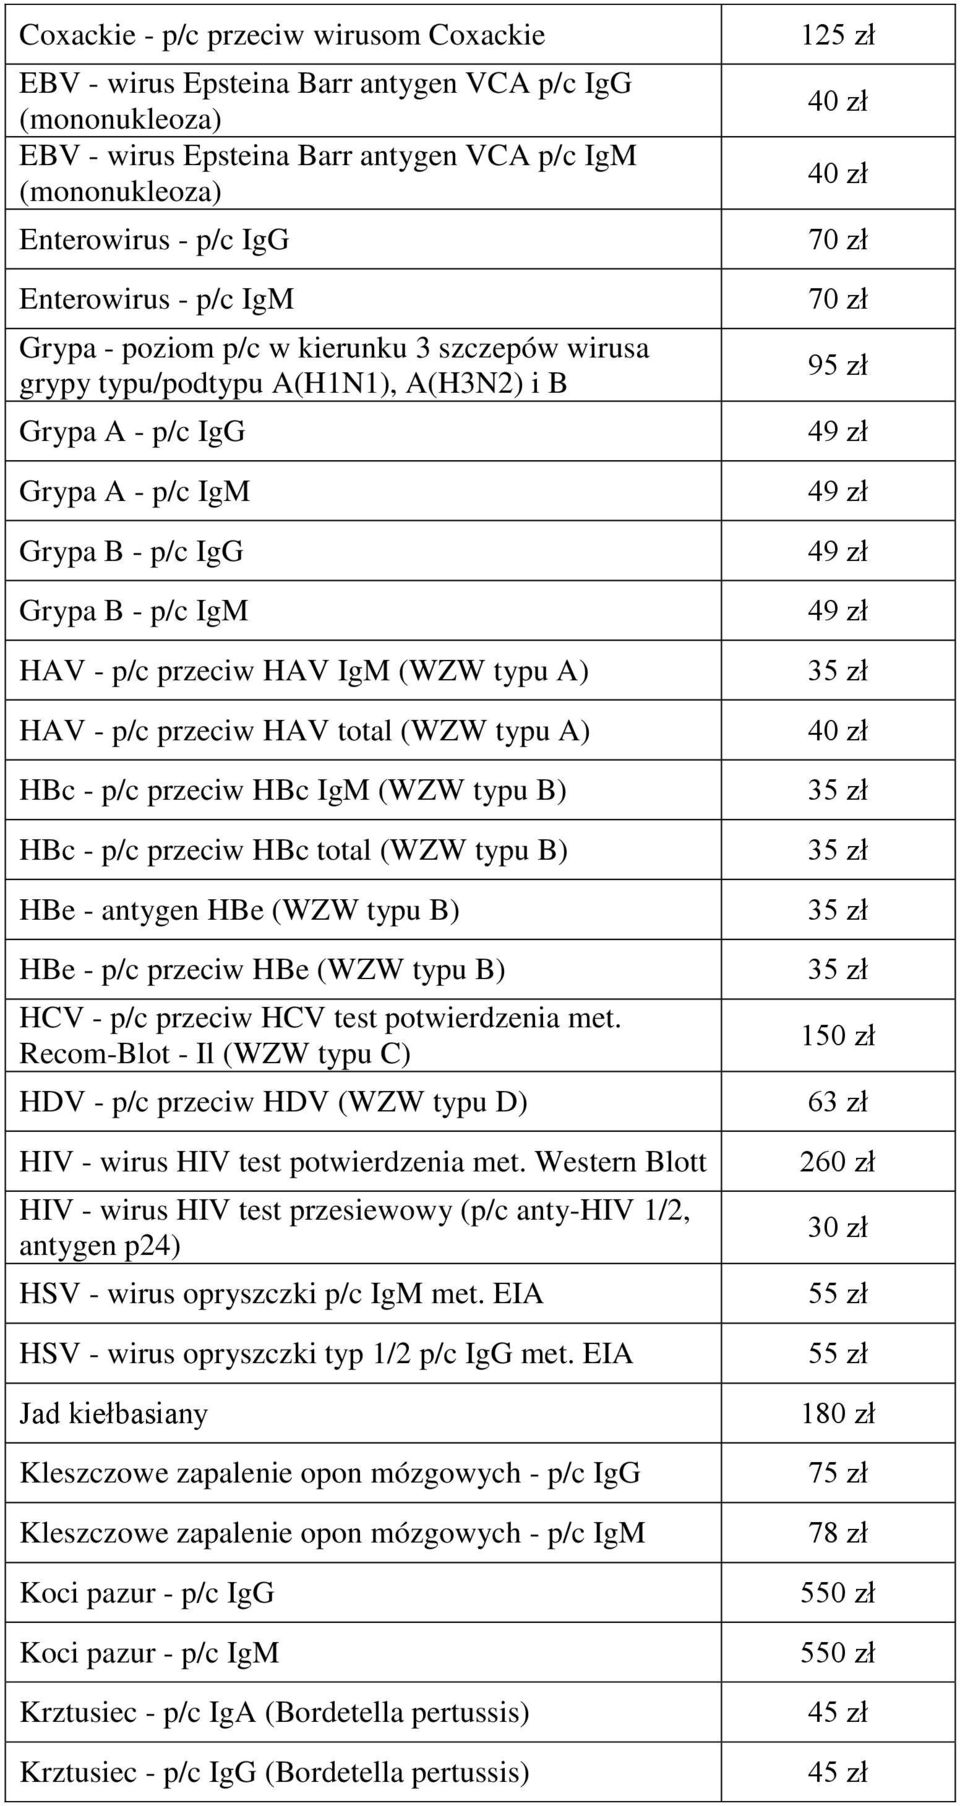 typu A) HAV - p/c przeciw HAV total (WZW typu A) HBc - p/c przeciw HBc IgM (WZW typu B) HBc - p/c przeciw HBc total (WZW typu B) HBe - antygen HBe (WZW typu B) HBe - p/c przeciw HBe (WZW typu B) HCV